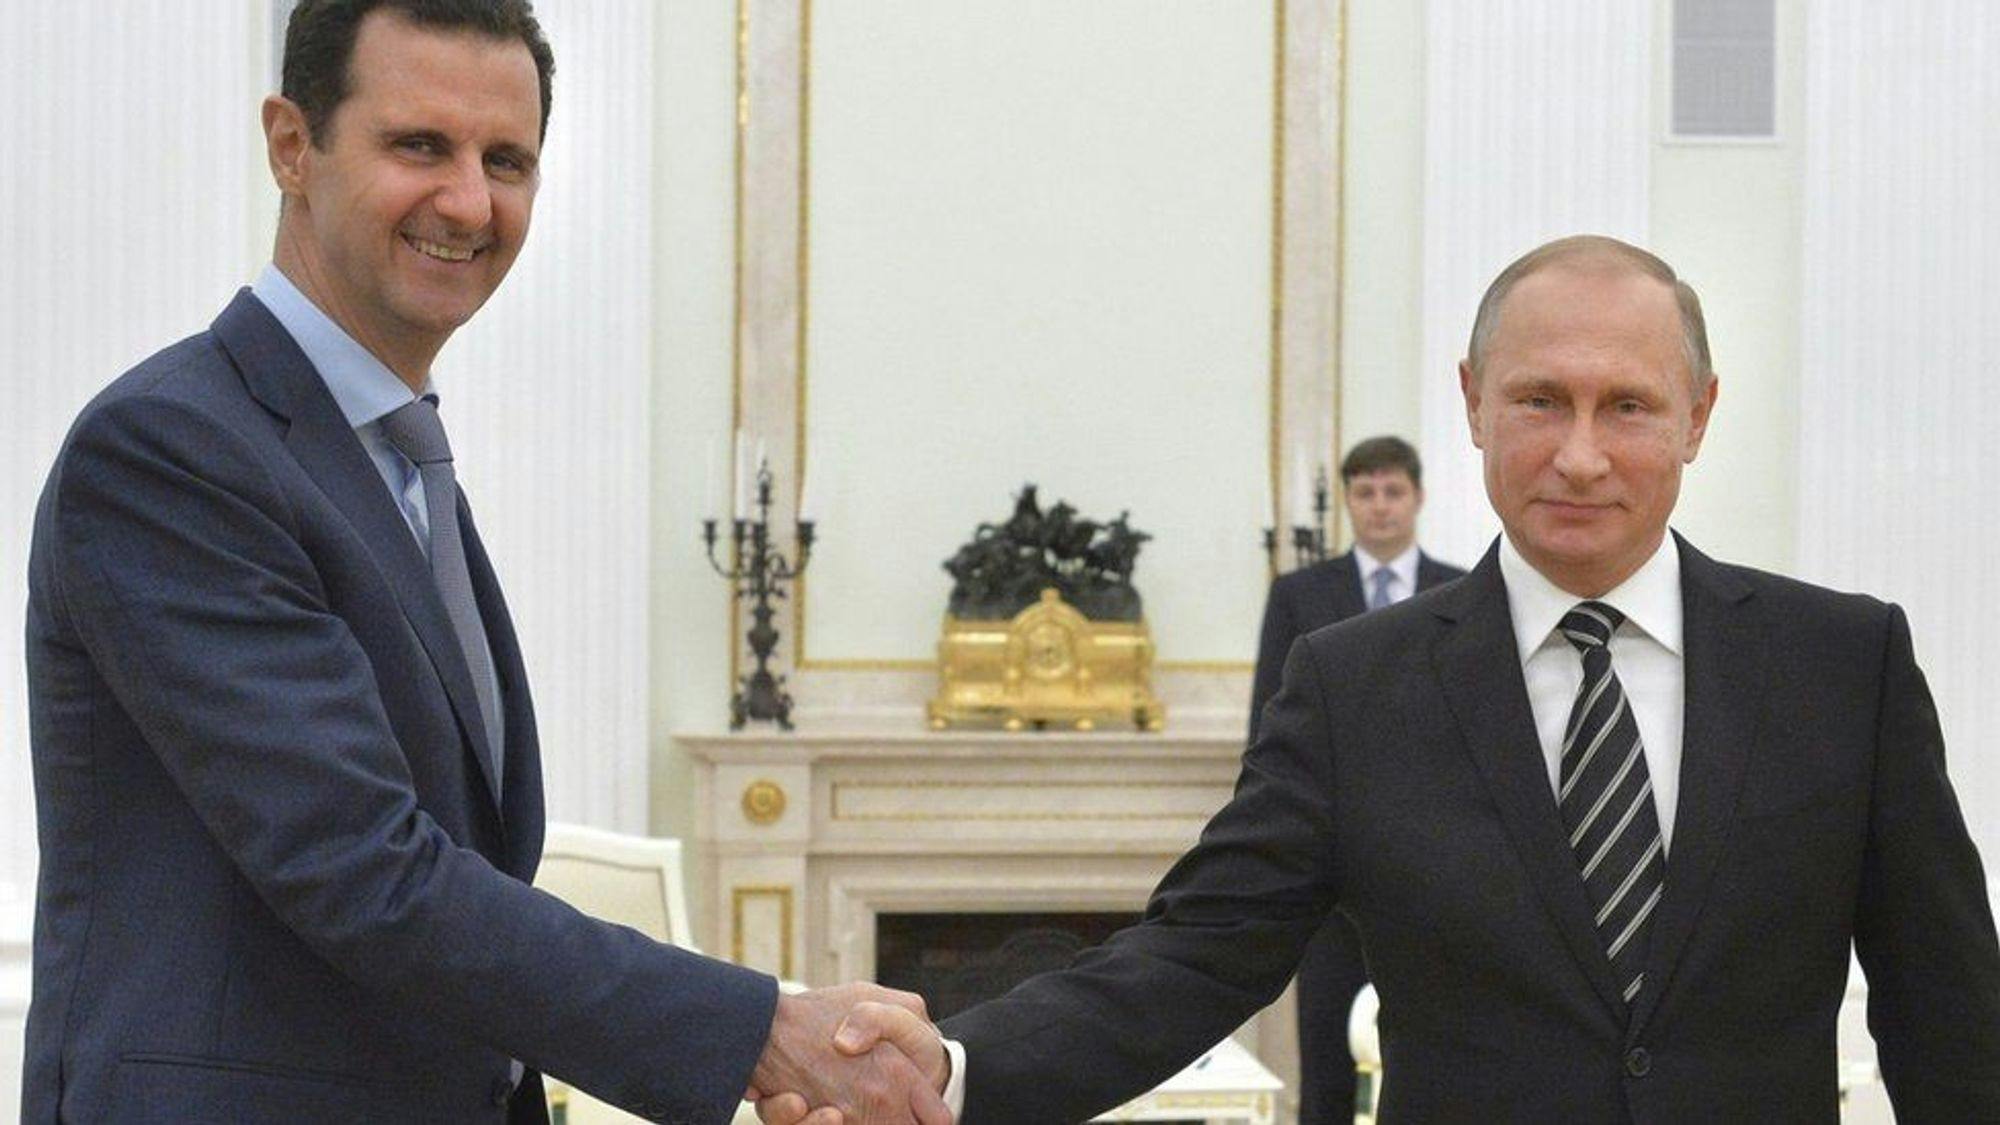 Photo of al-Assad and Putin shaking hands